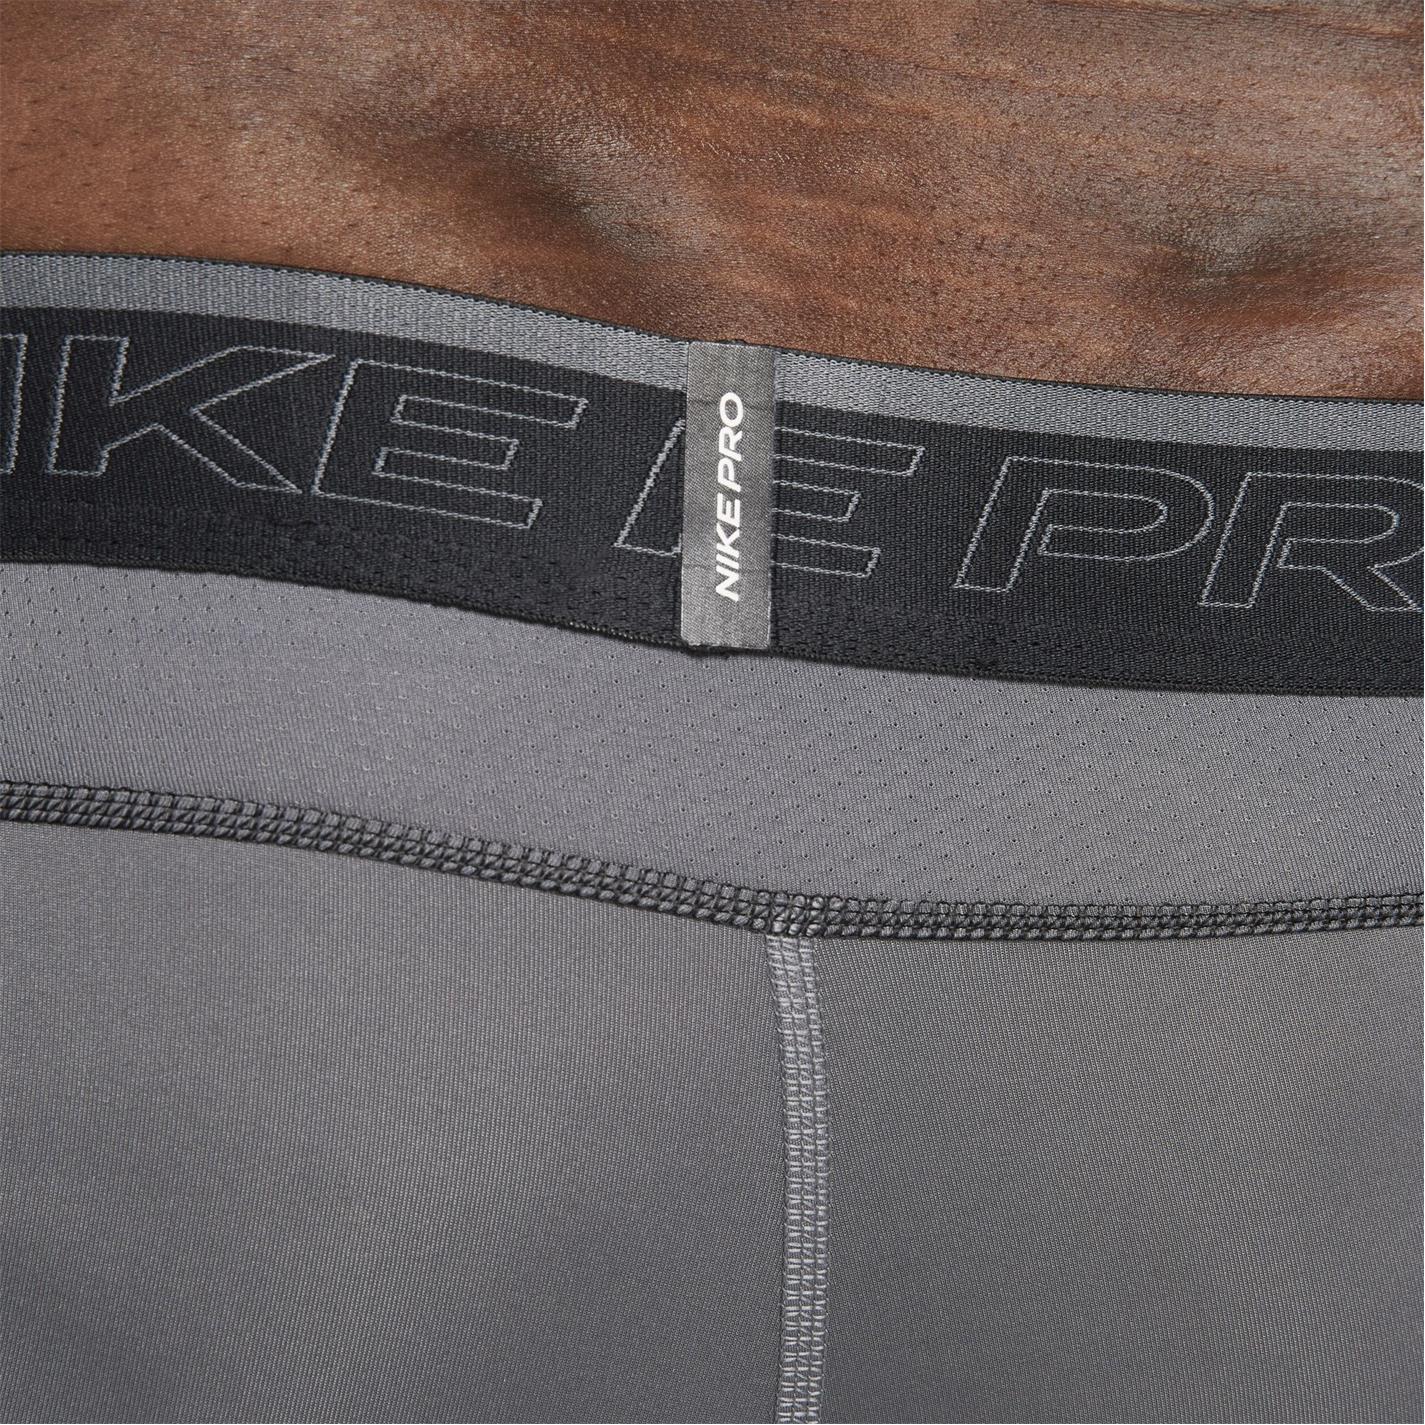 Nike Pro Core 9 Base Layer Shorts Mens